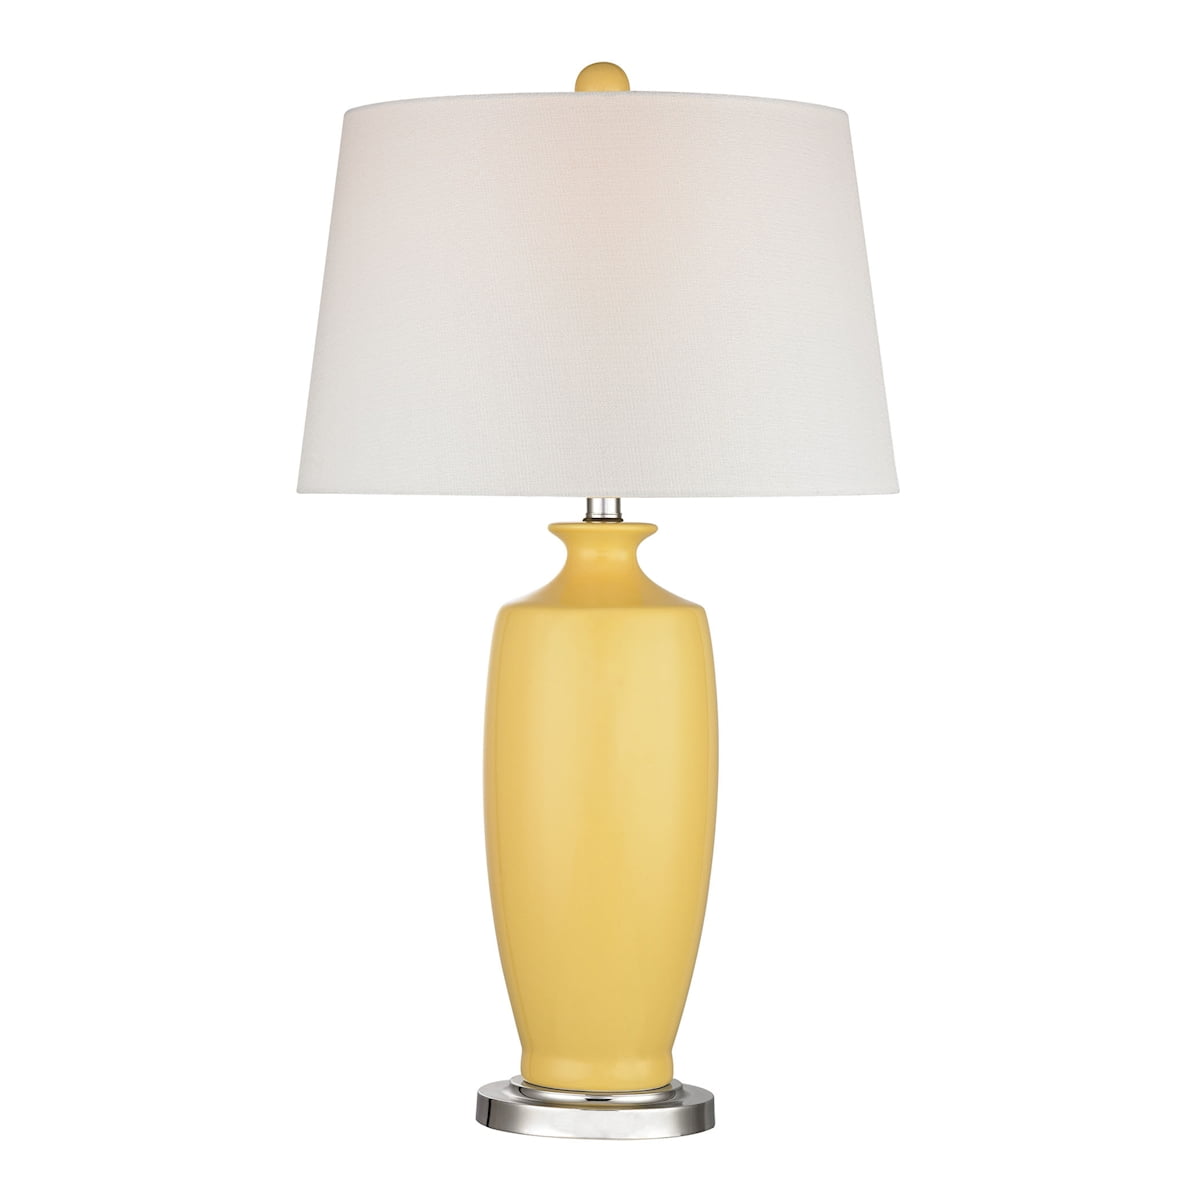 27" Sunshine Yellow Finish Halisham Ceramic Table Lamp with Round White